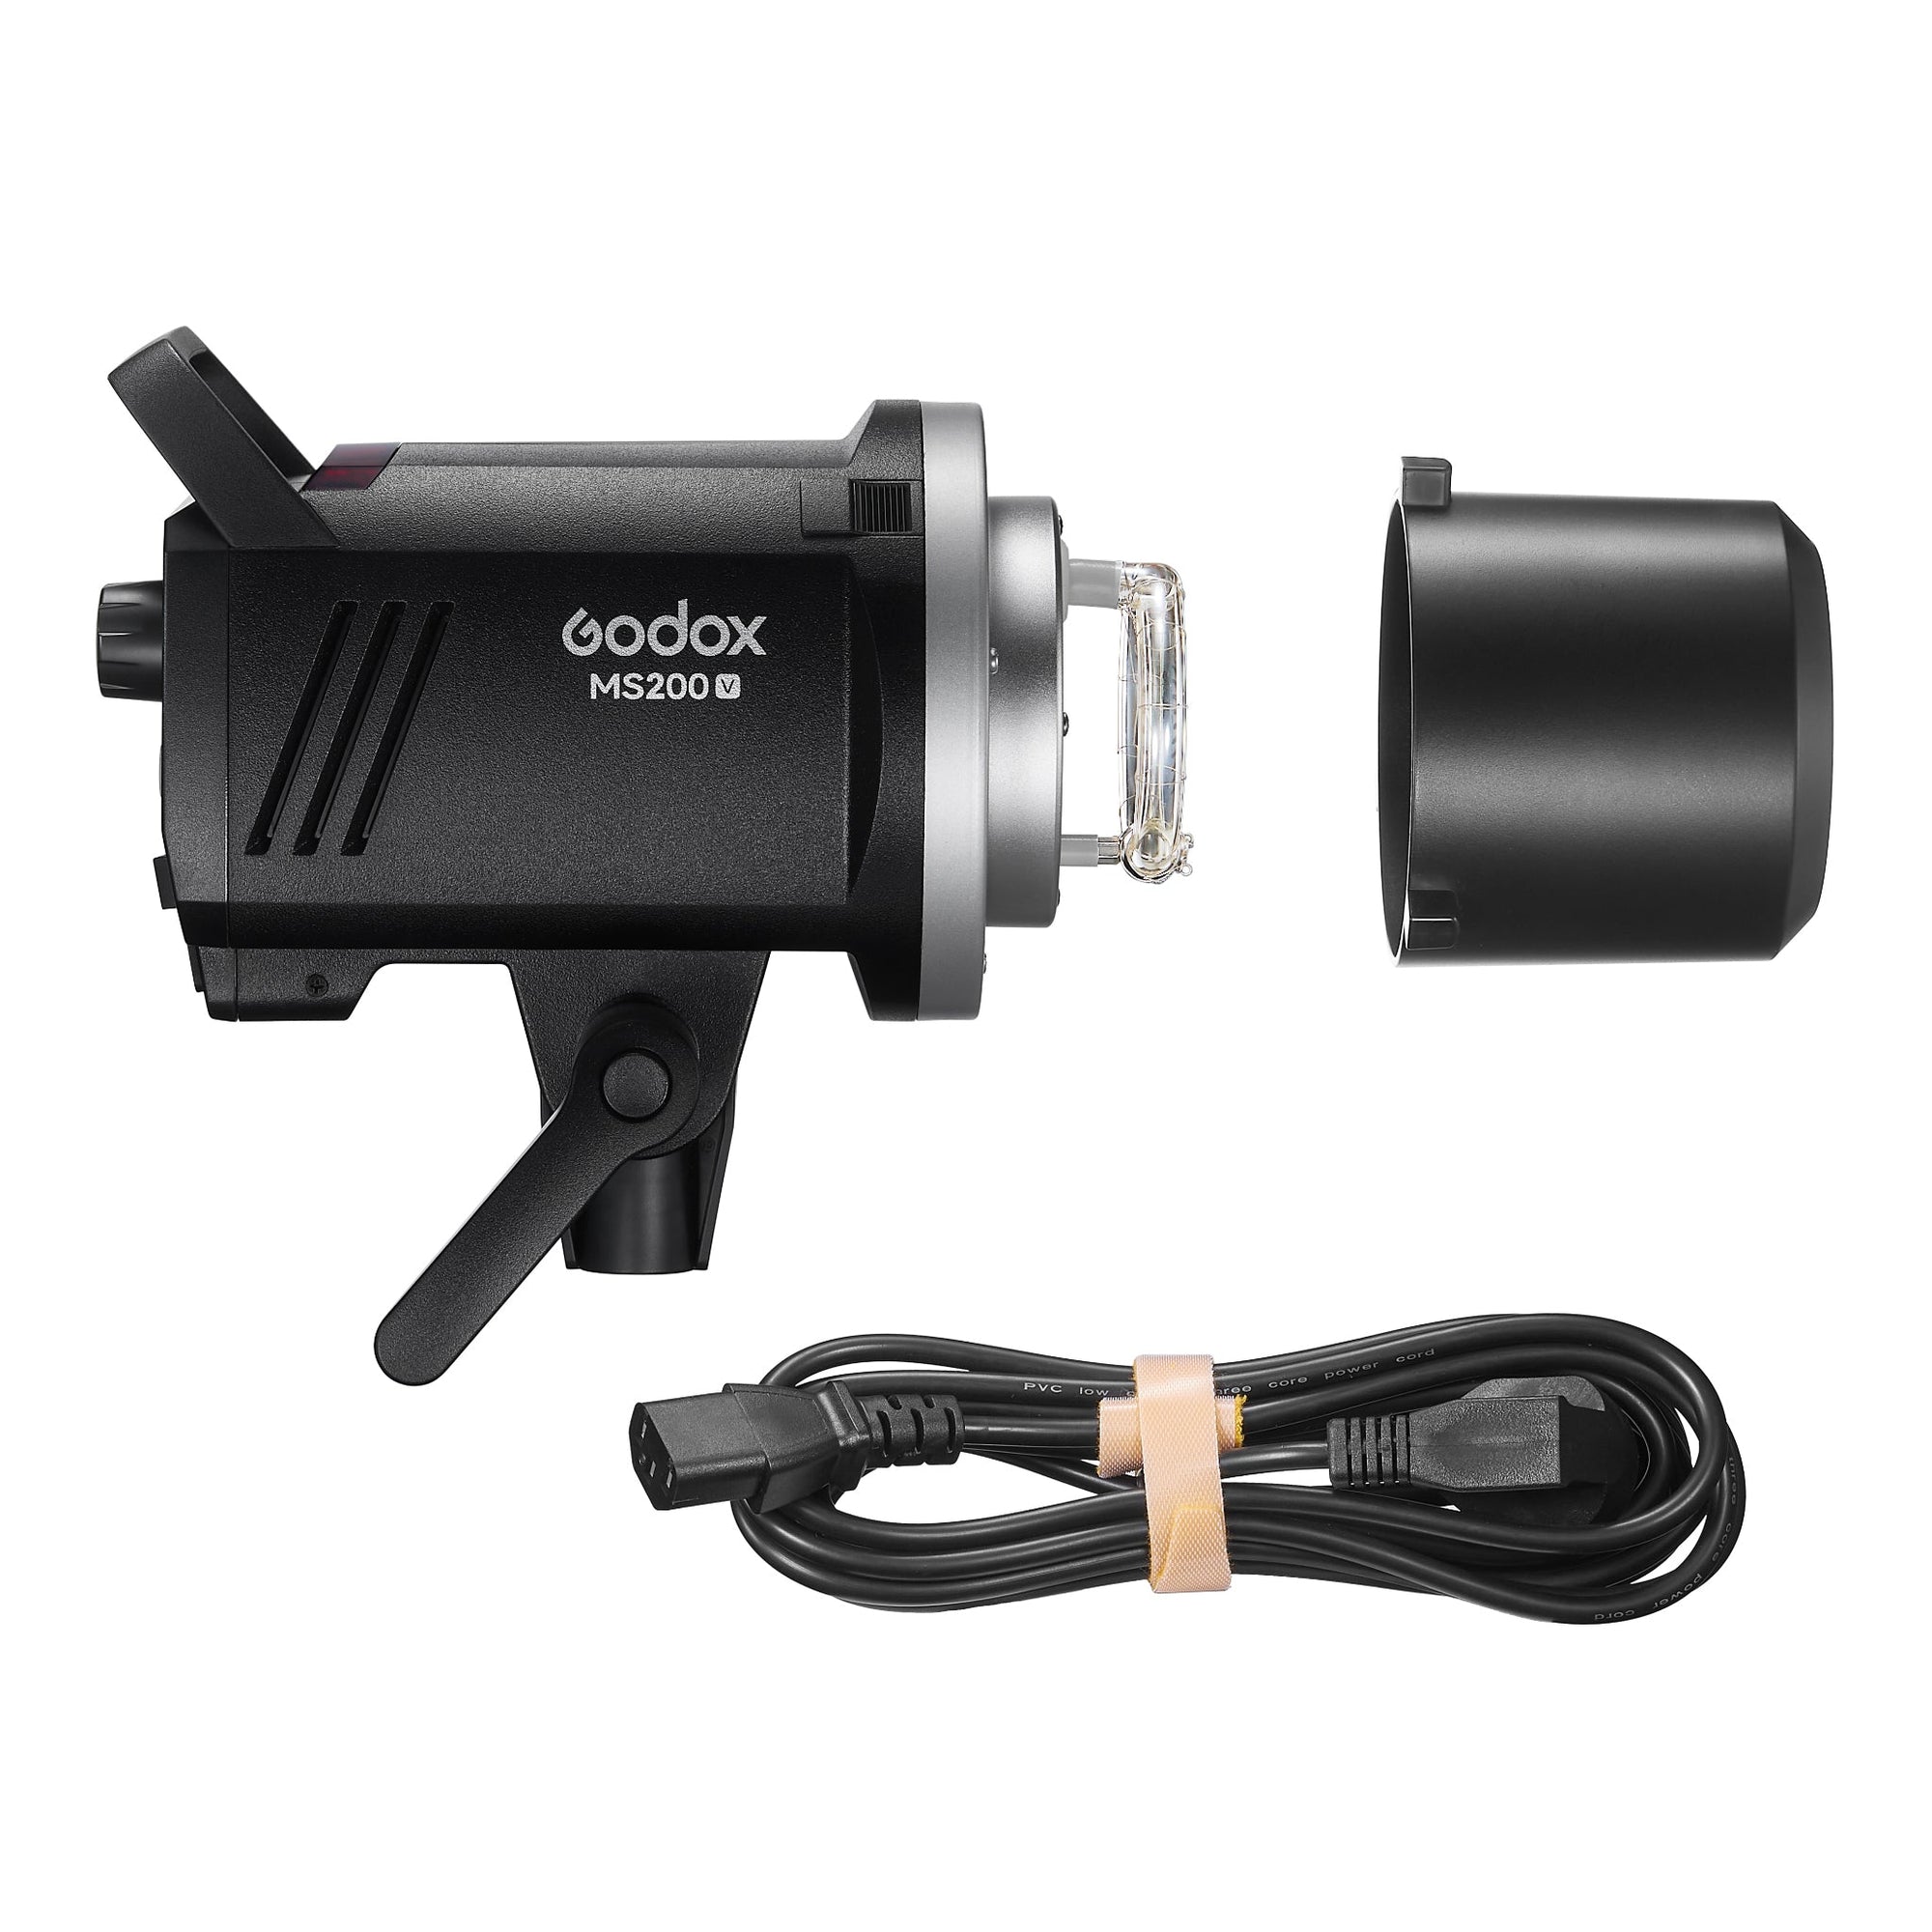 Godox MS300-V Compact Studio Flash